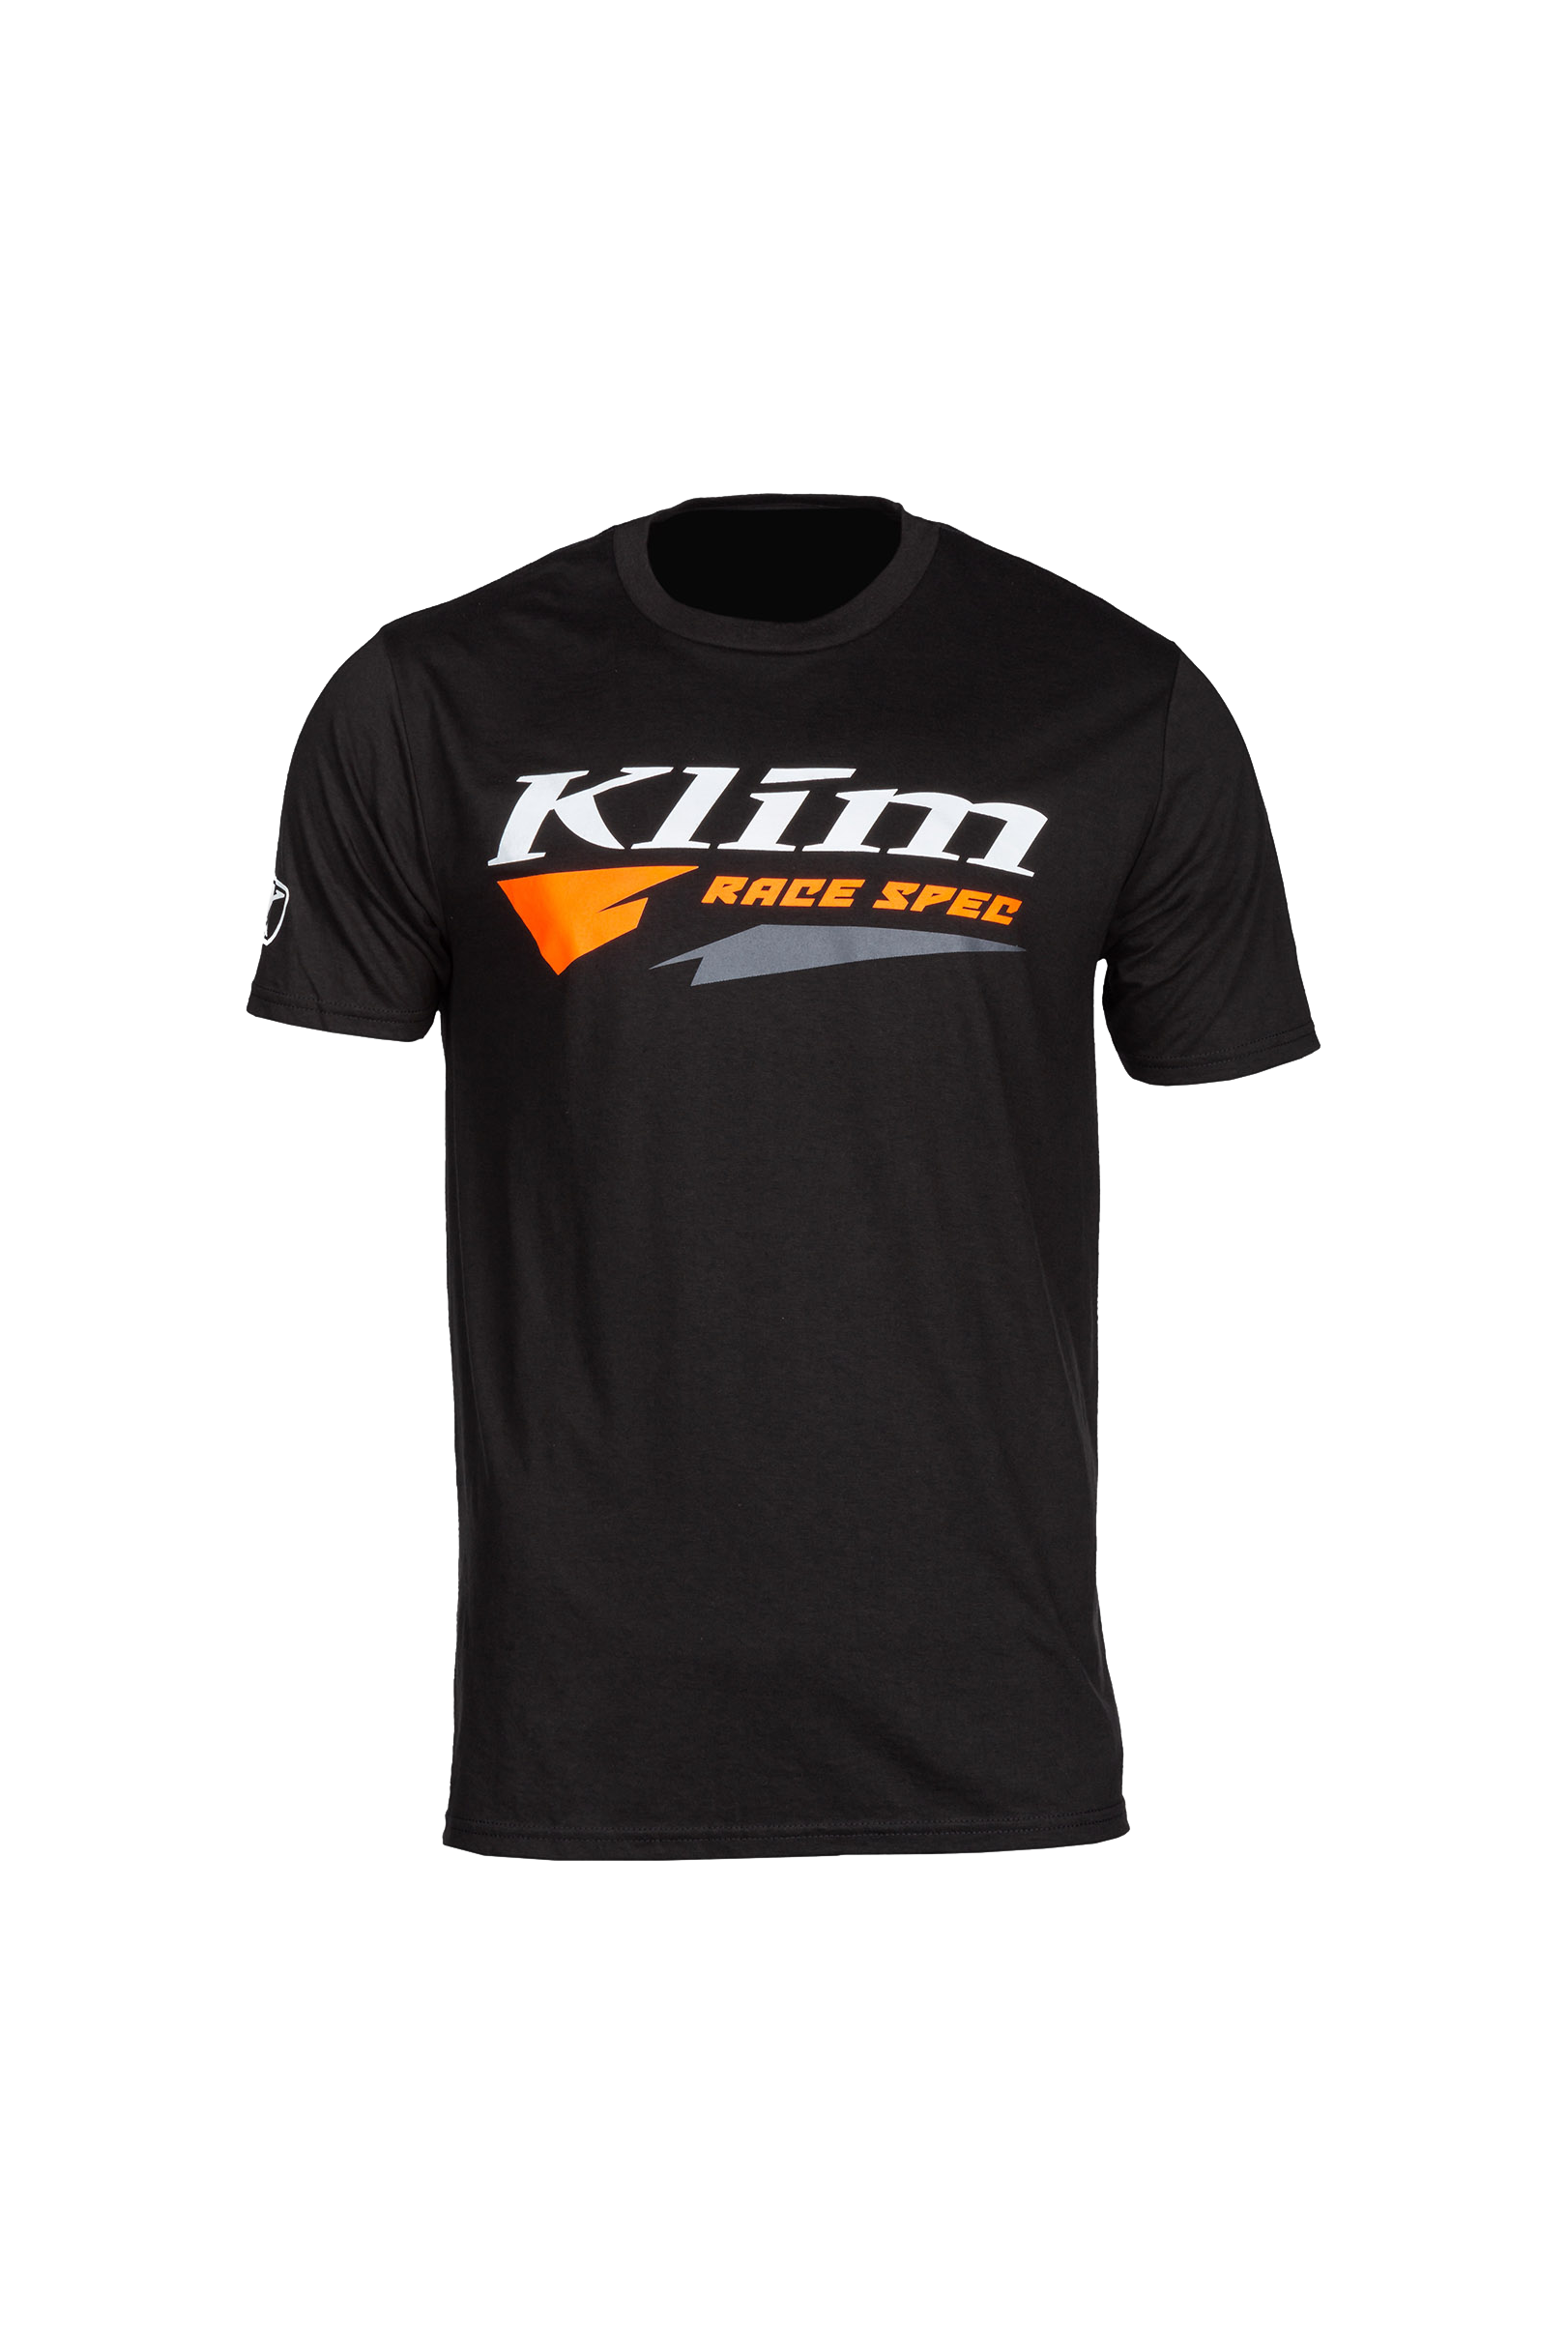 KLIM T-Skjorte KLIM Race Spec SS Svart-Strike Oransje